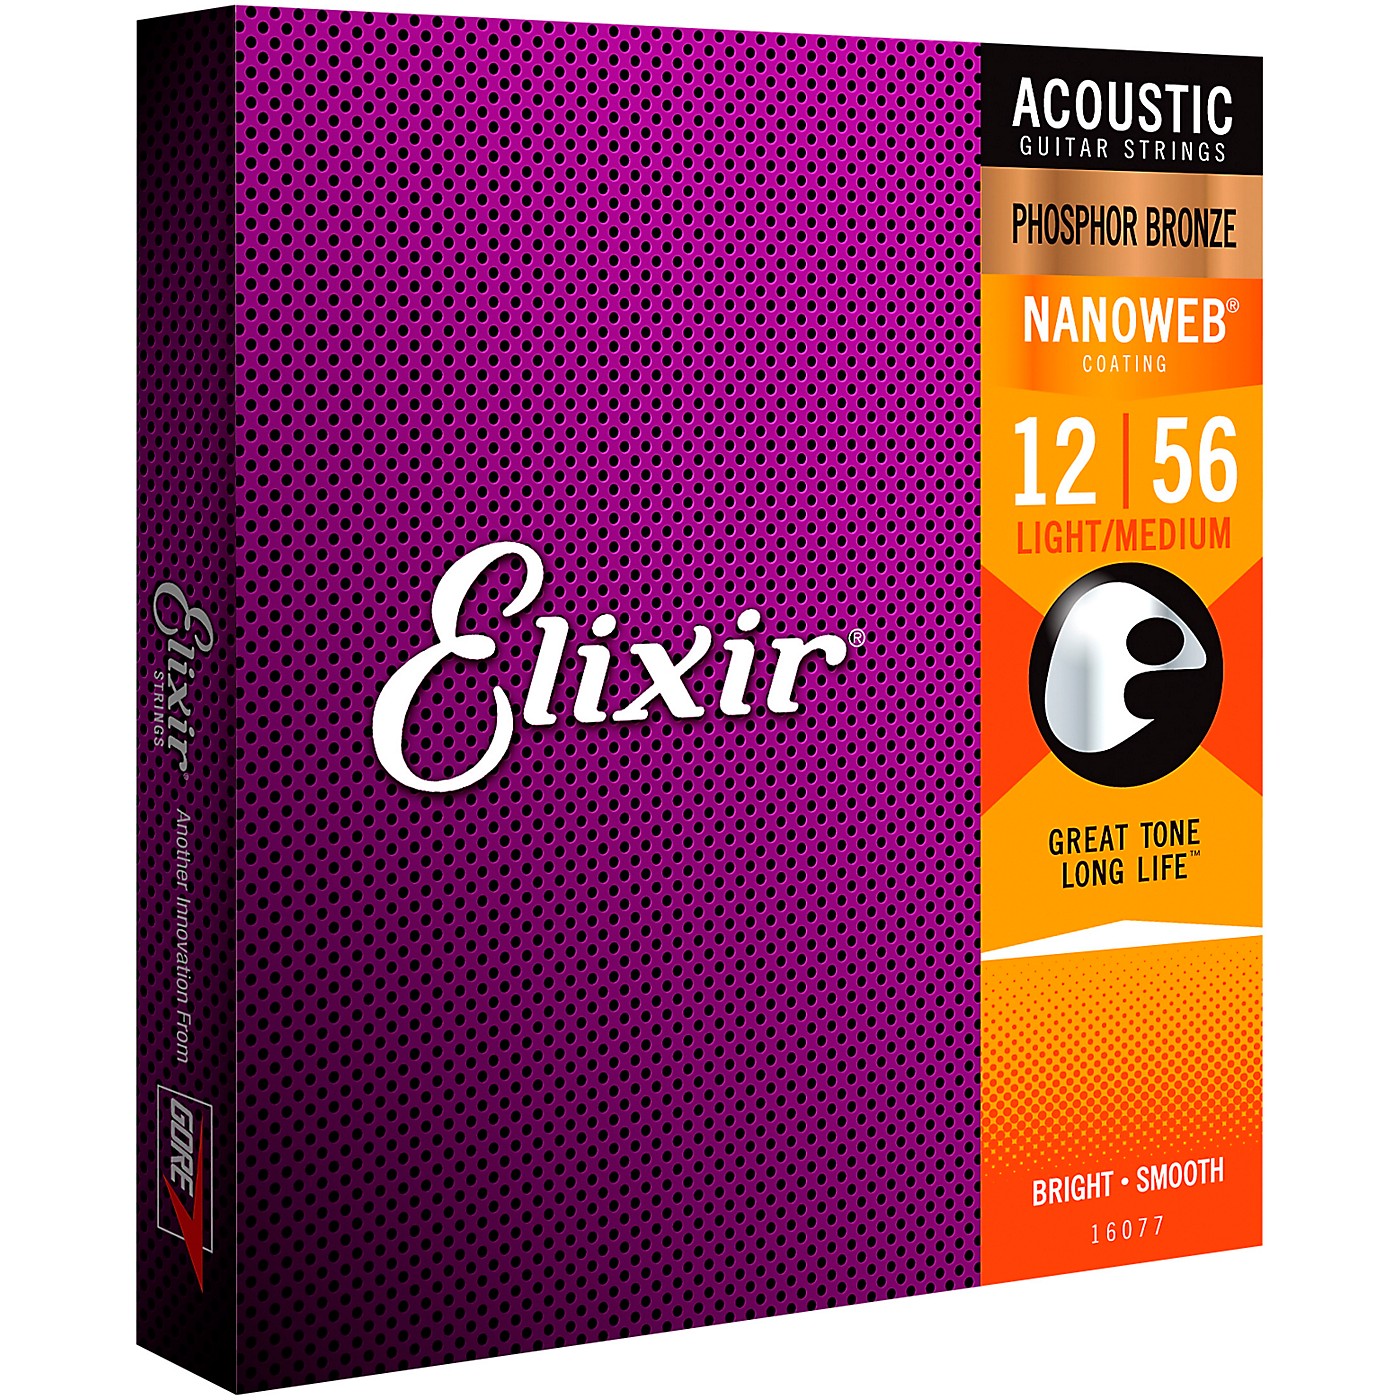 Elixir Phosphor Bronze Acoustic Guitar Strings With NANOWEB Coating, Light/Medium (.012-.056) thumbnail